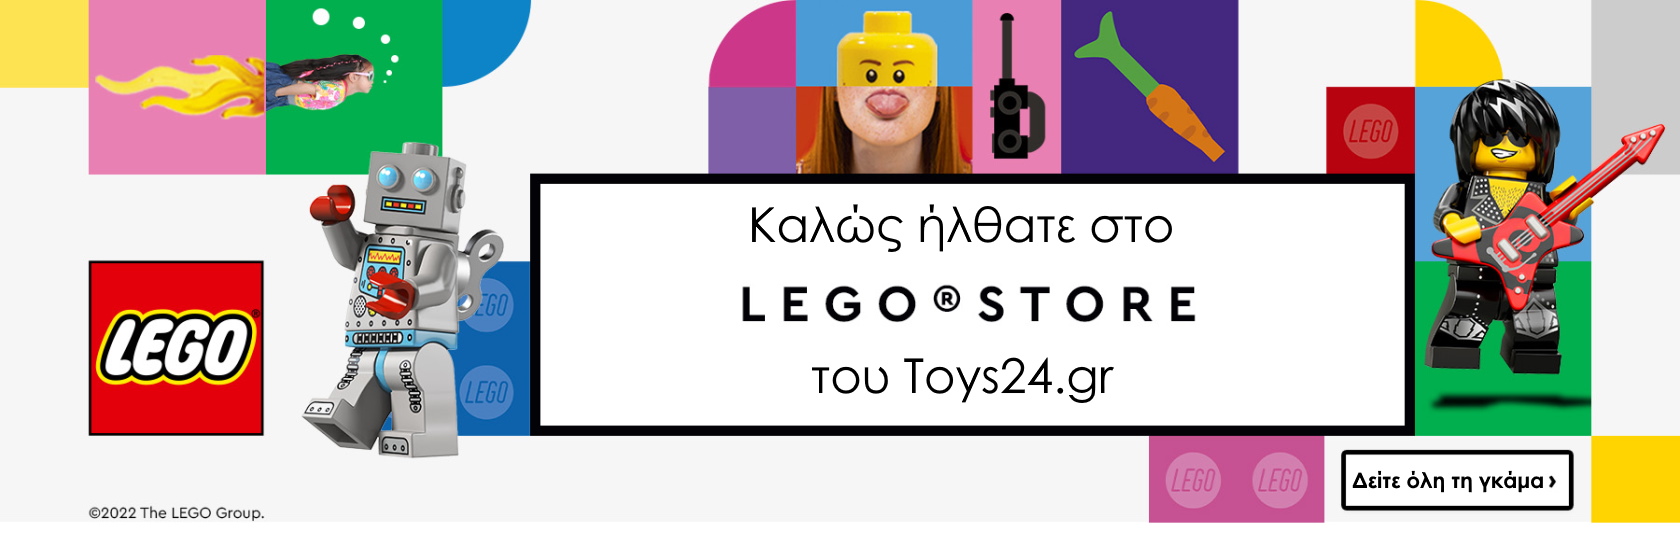 LEGO City Διαστρικό Διαστημόπλοιο  (60430)